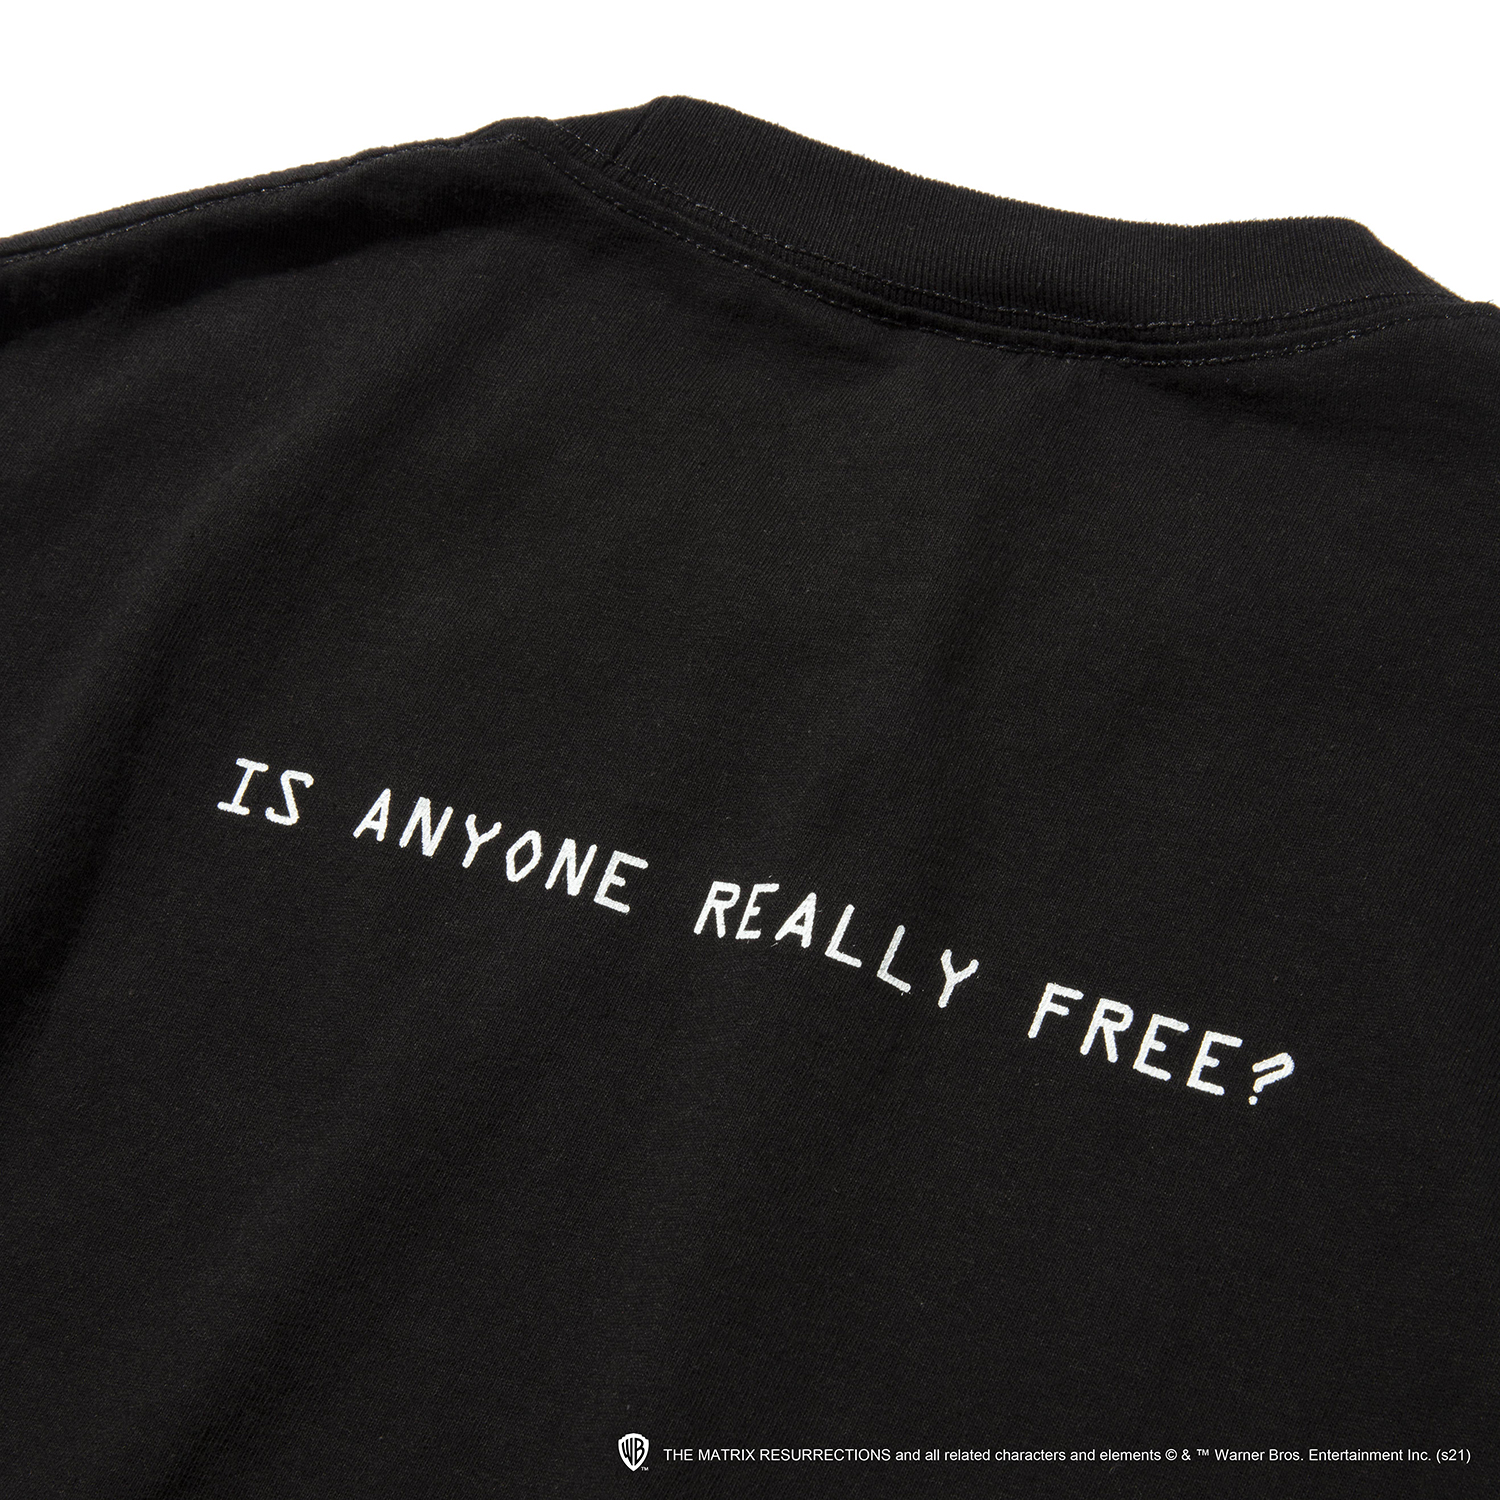 The Matrix Resurrections』とweberのオフィシャルコラボレーションTシャツ